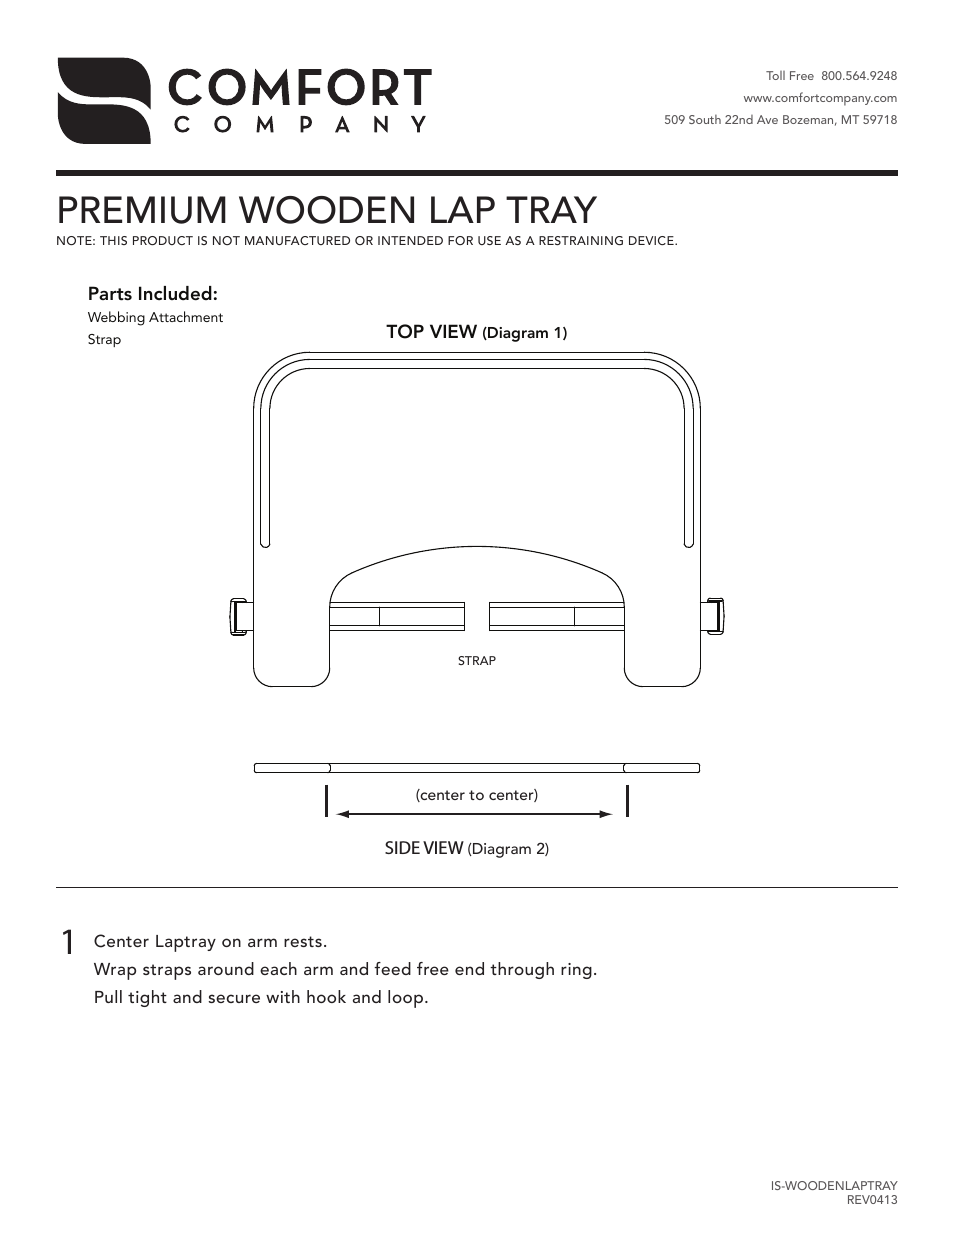 Wooden Lap Tray